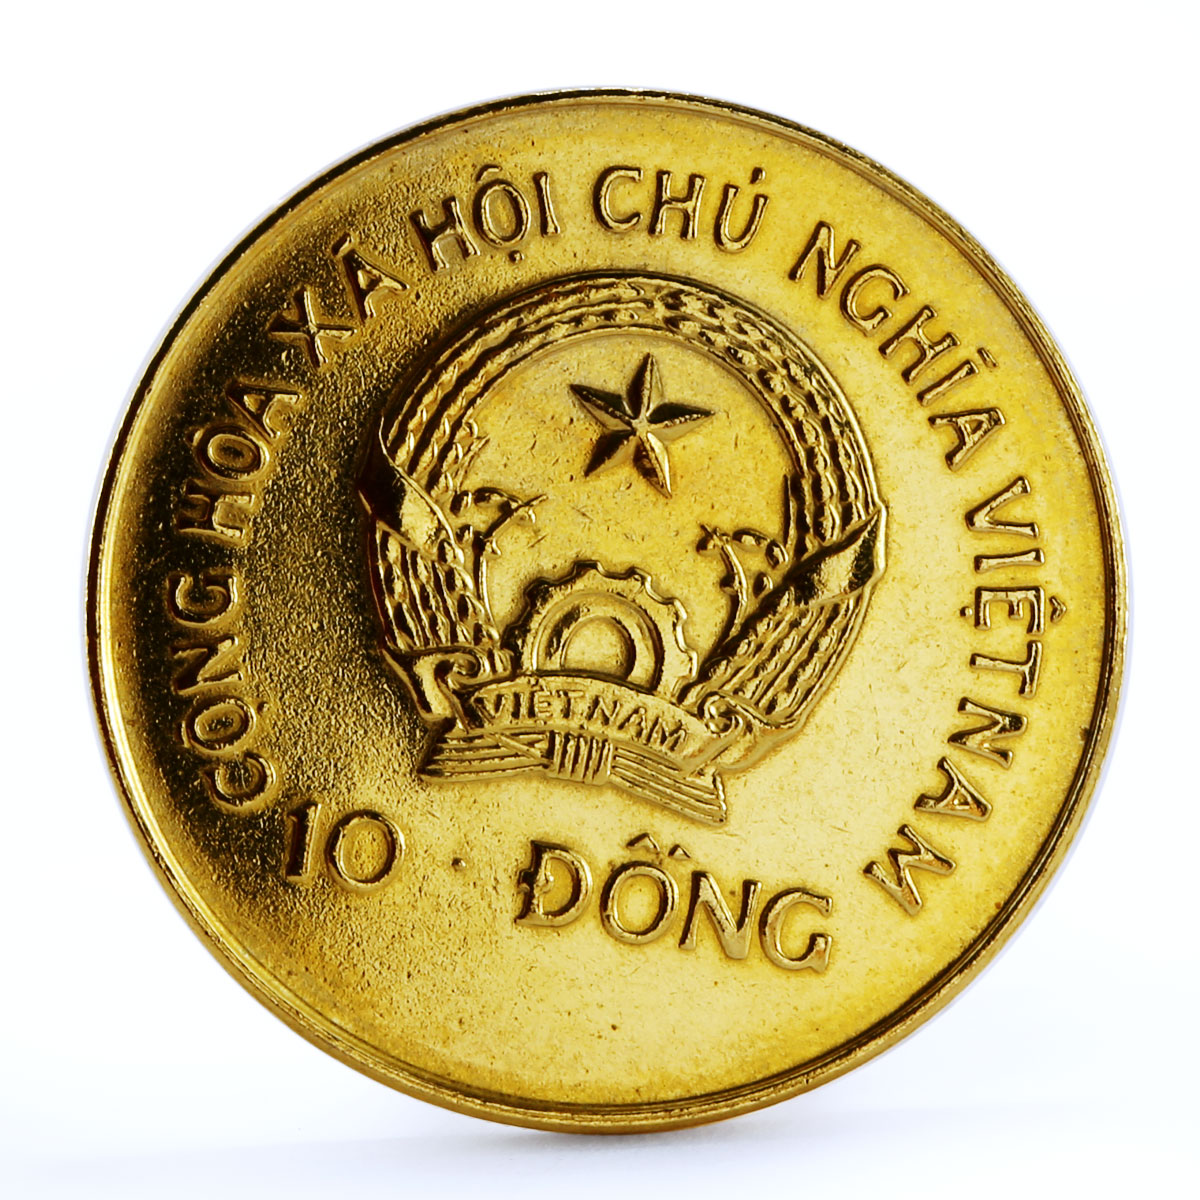 Vietnam 10 dong Boats of the World series Savannah Ship gilded CuNi coin 1991